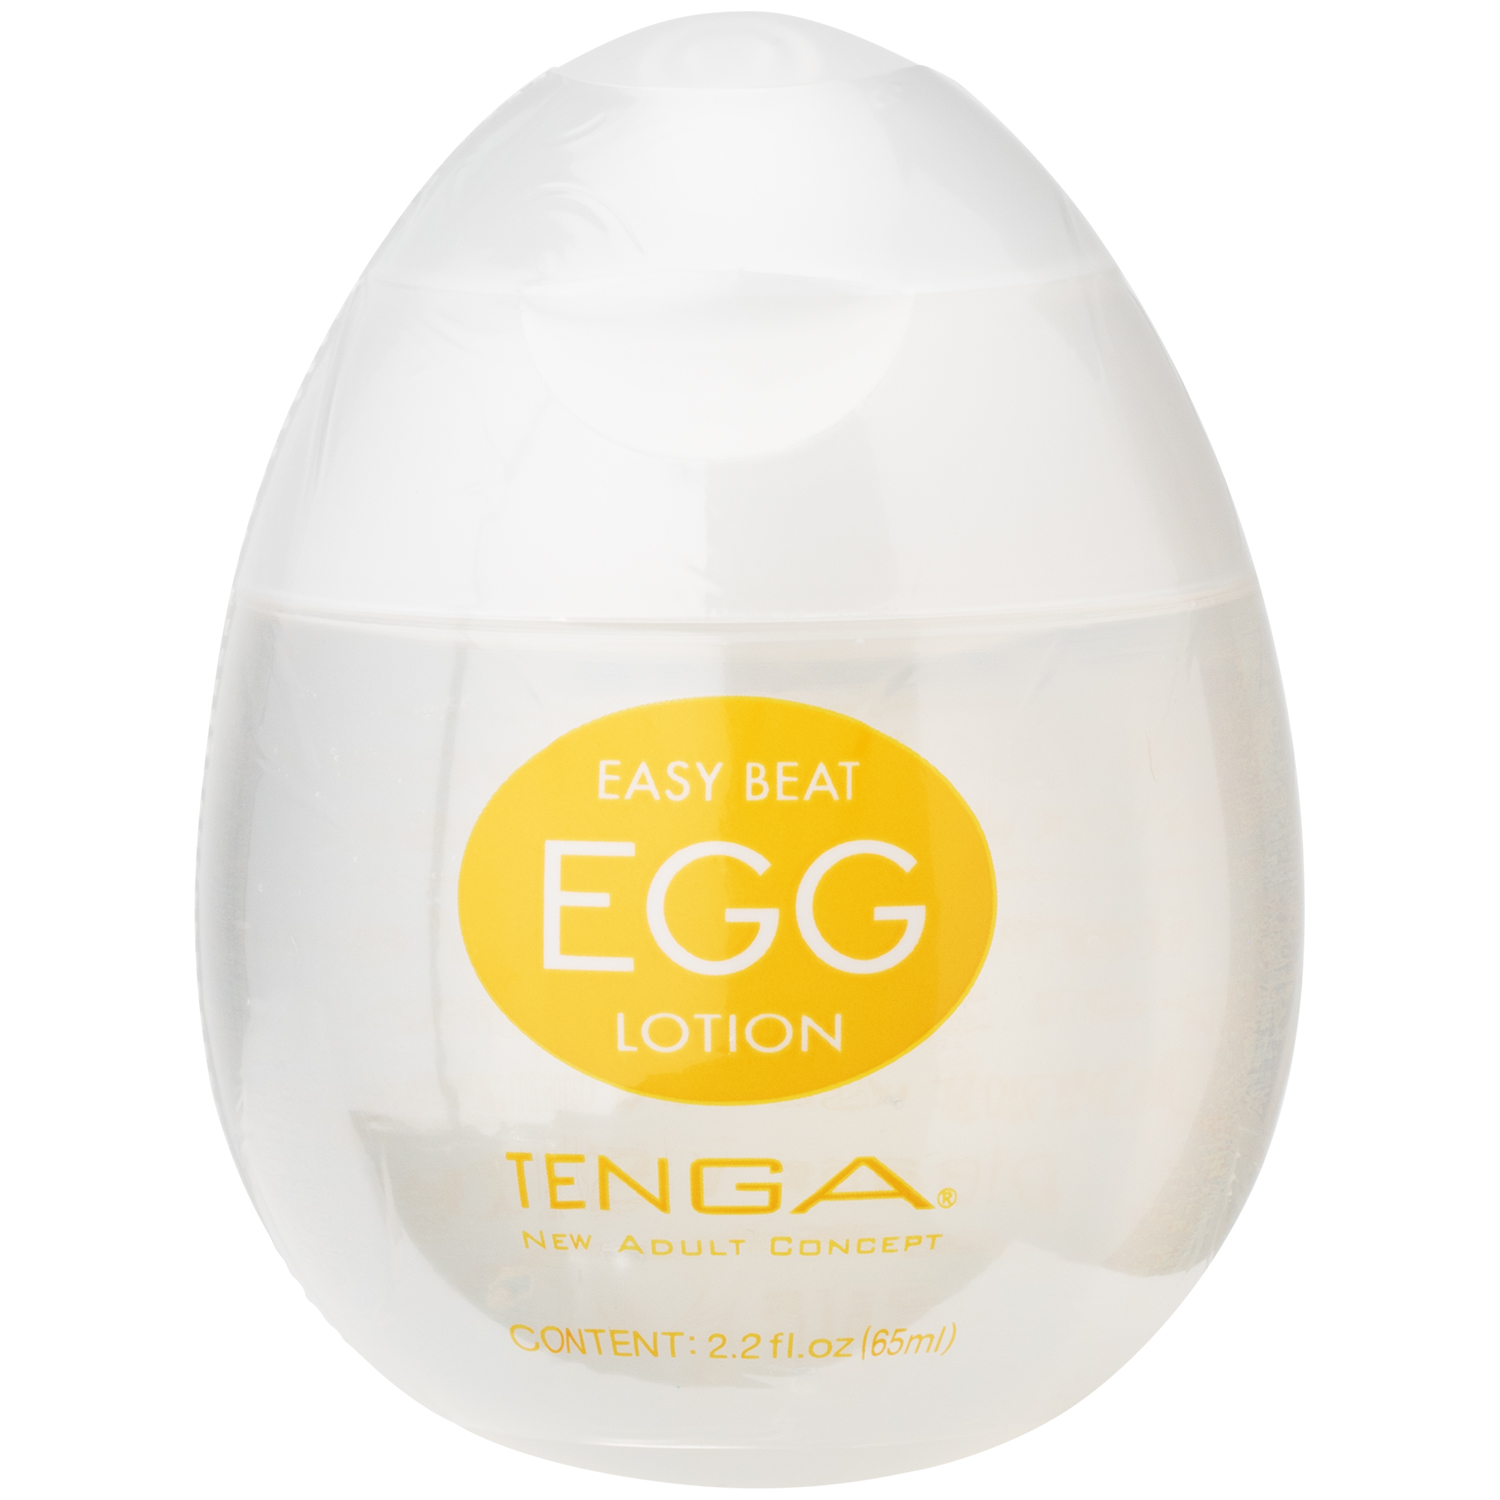 TENGA Egg Lotion Glidecreme 65 ml - Clear